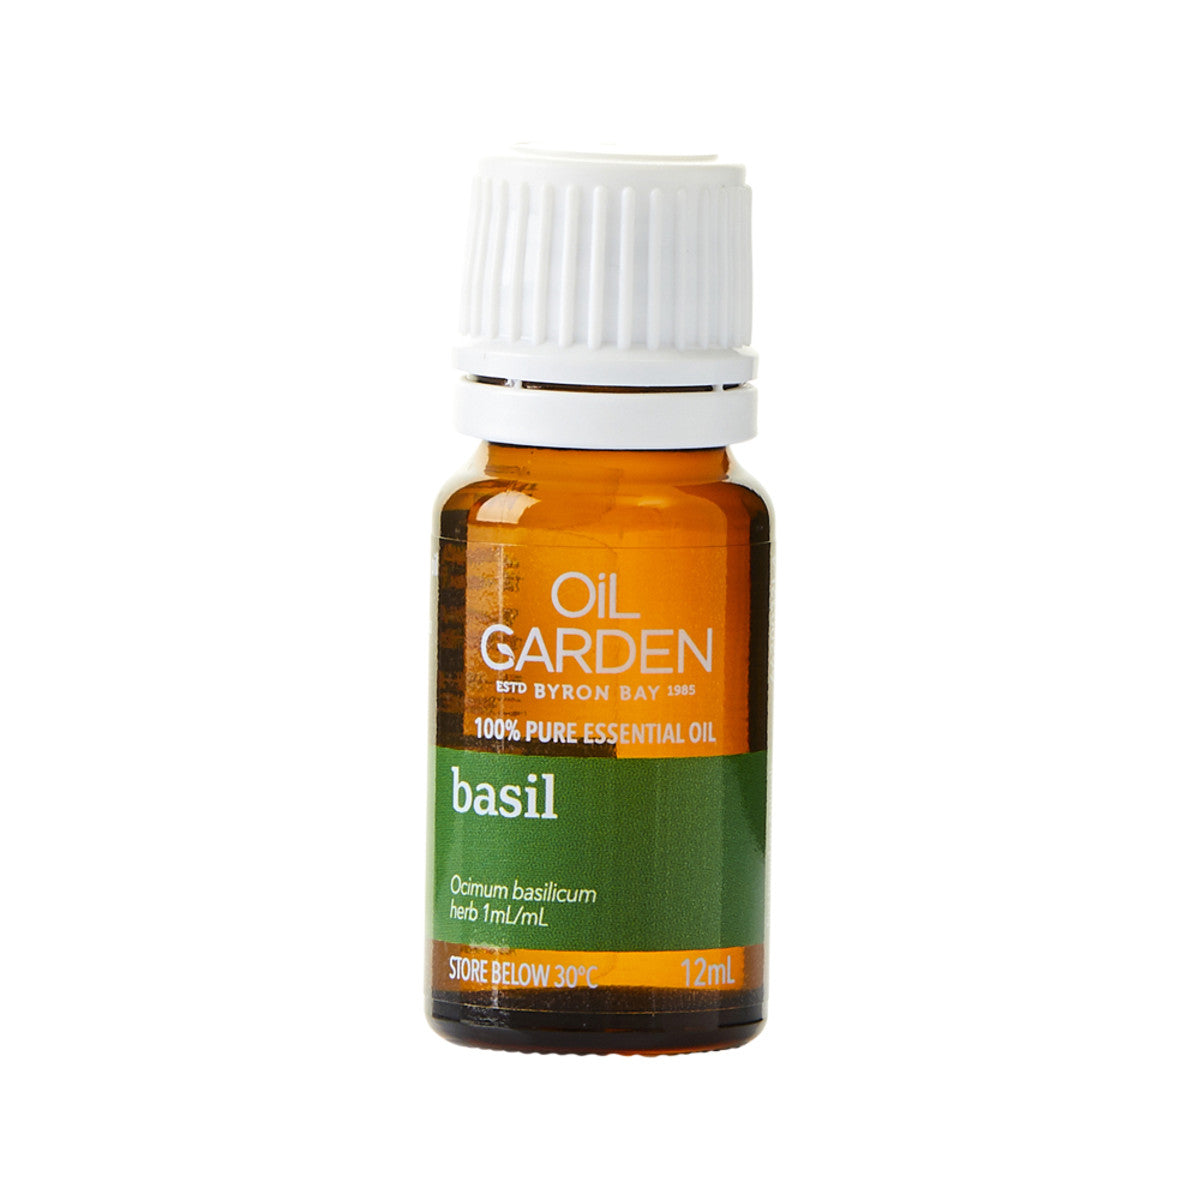 Oil Garden Essential Oil Basil 12ml